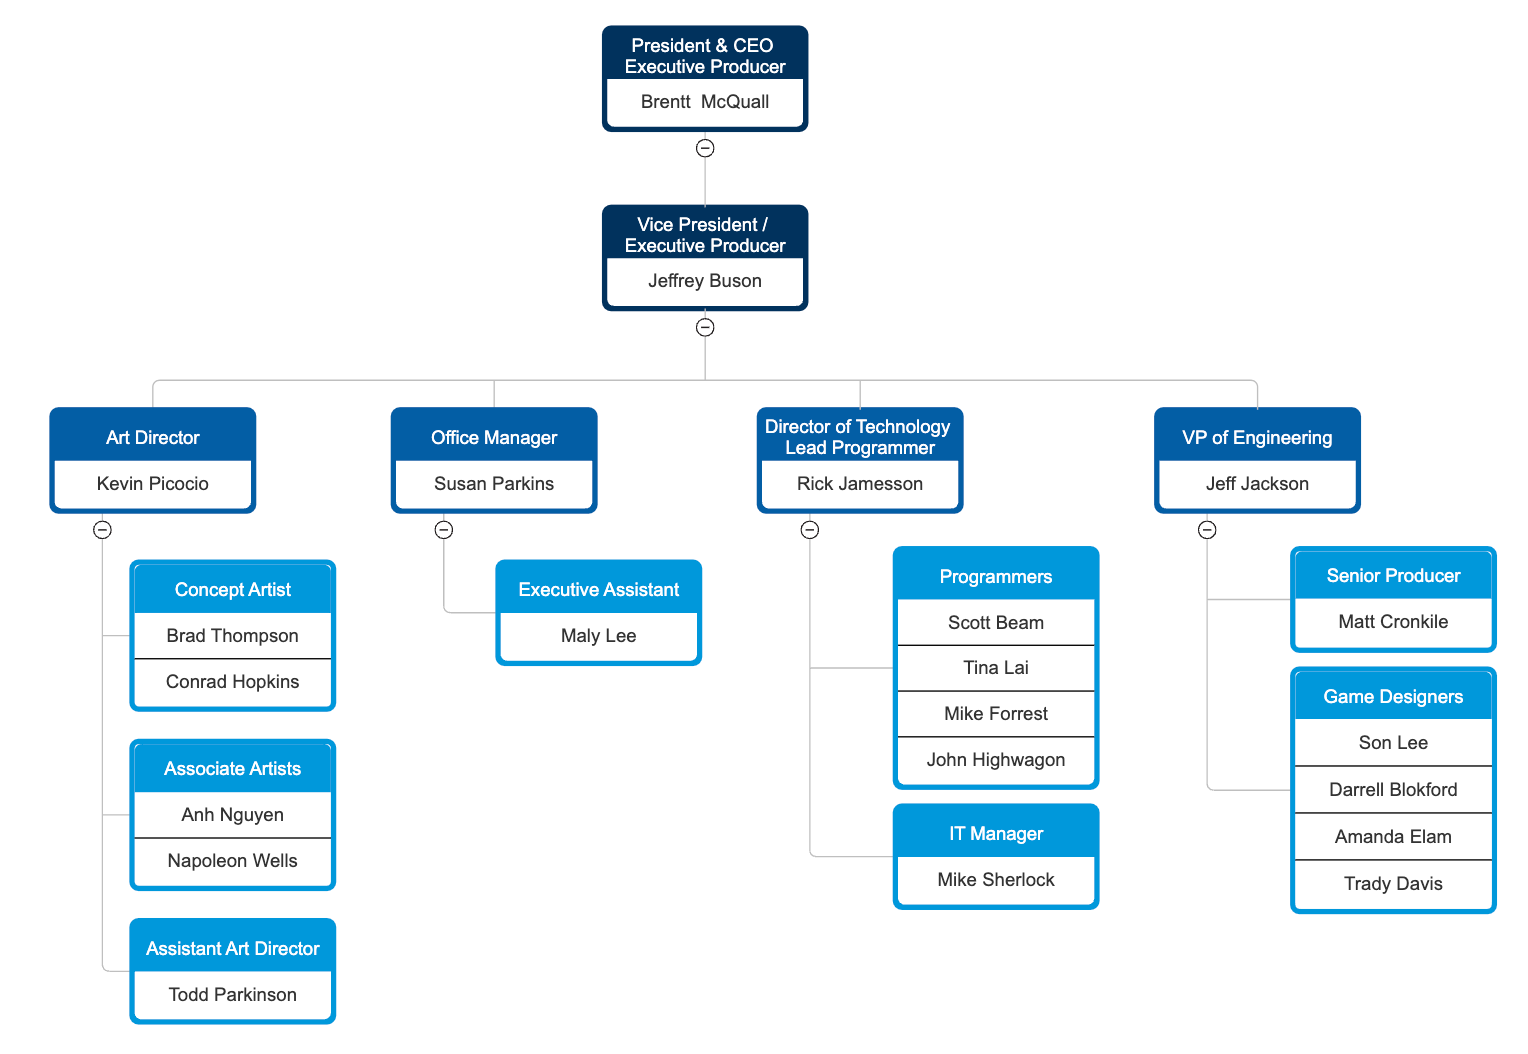 An organizational chart showing management structure